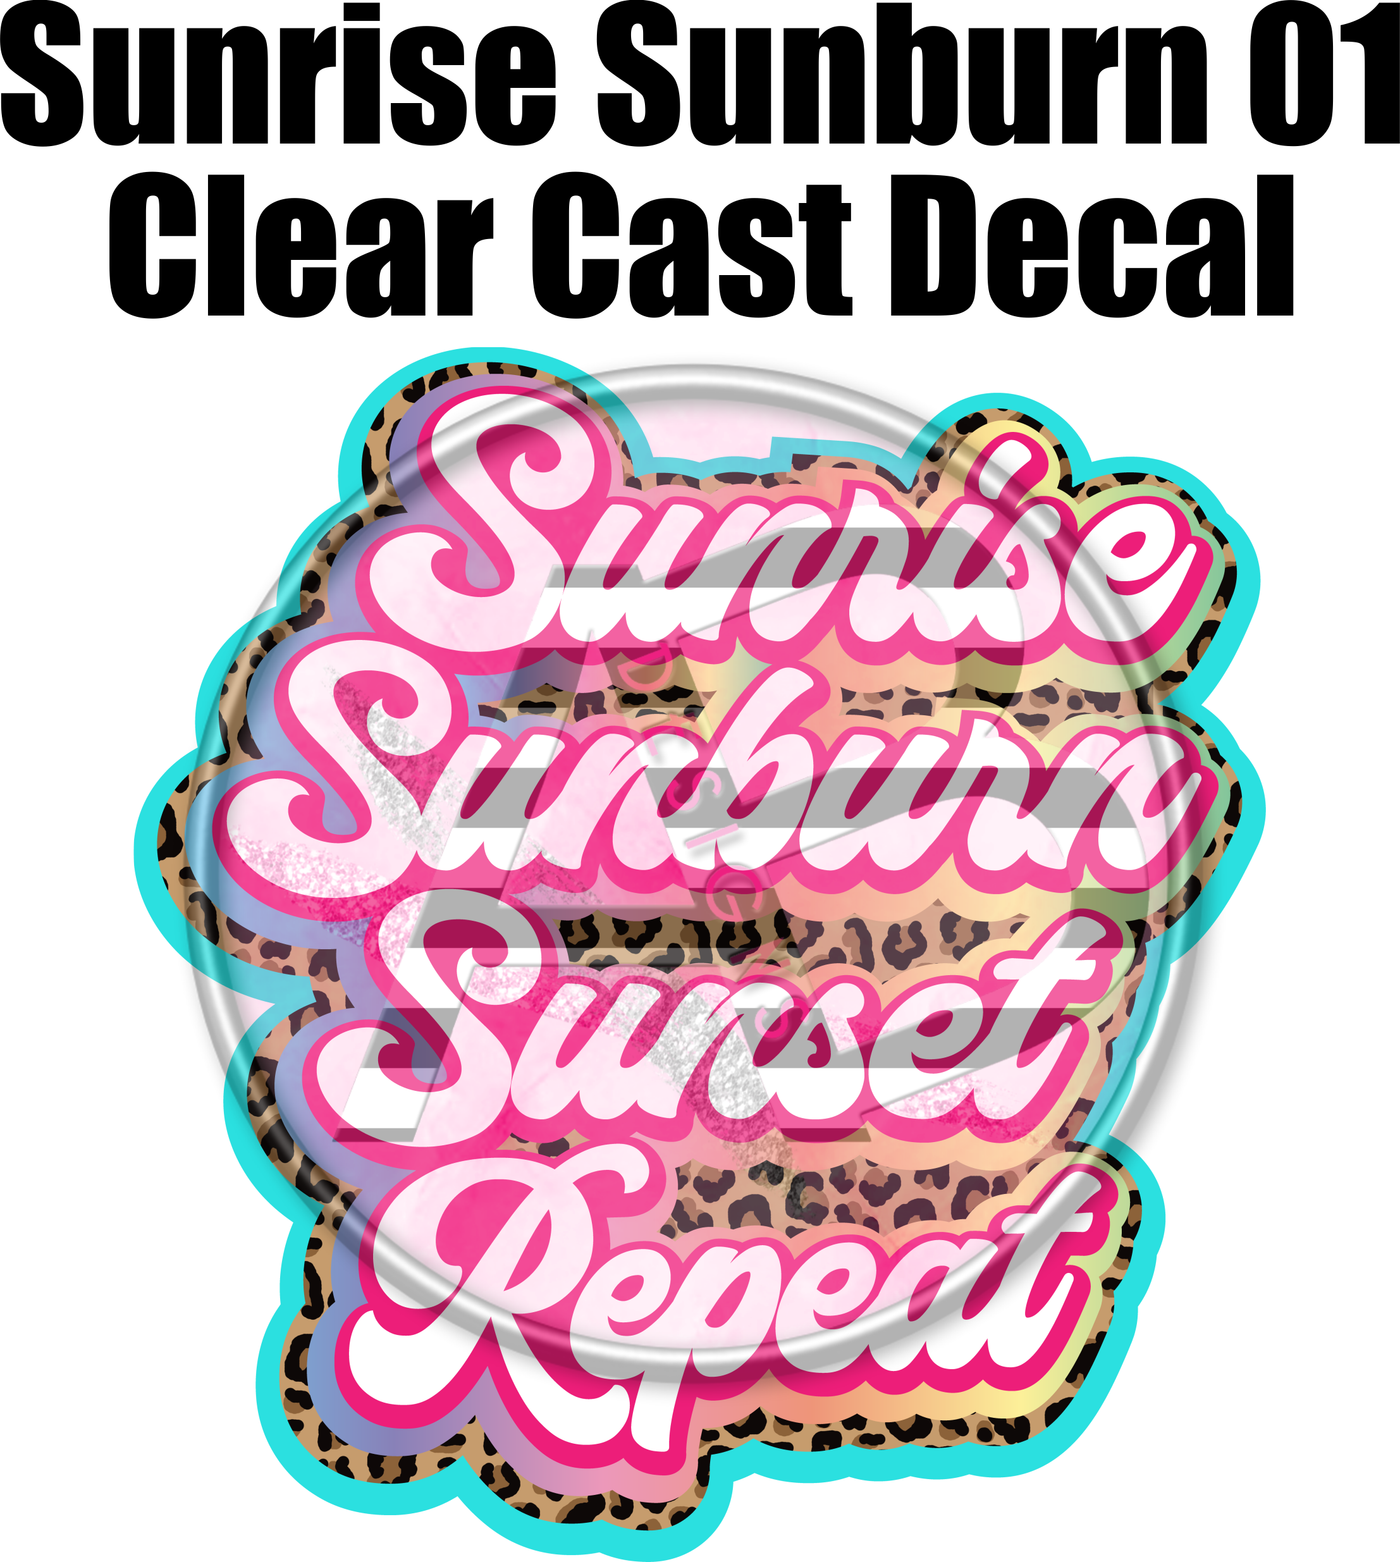 Sunrise Sunburn 01 - Clear Cast Decal